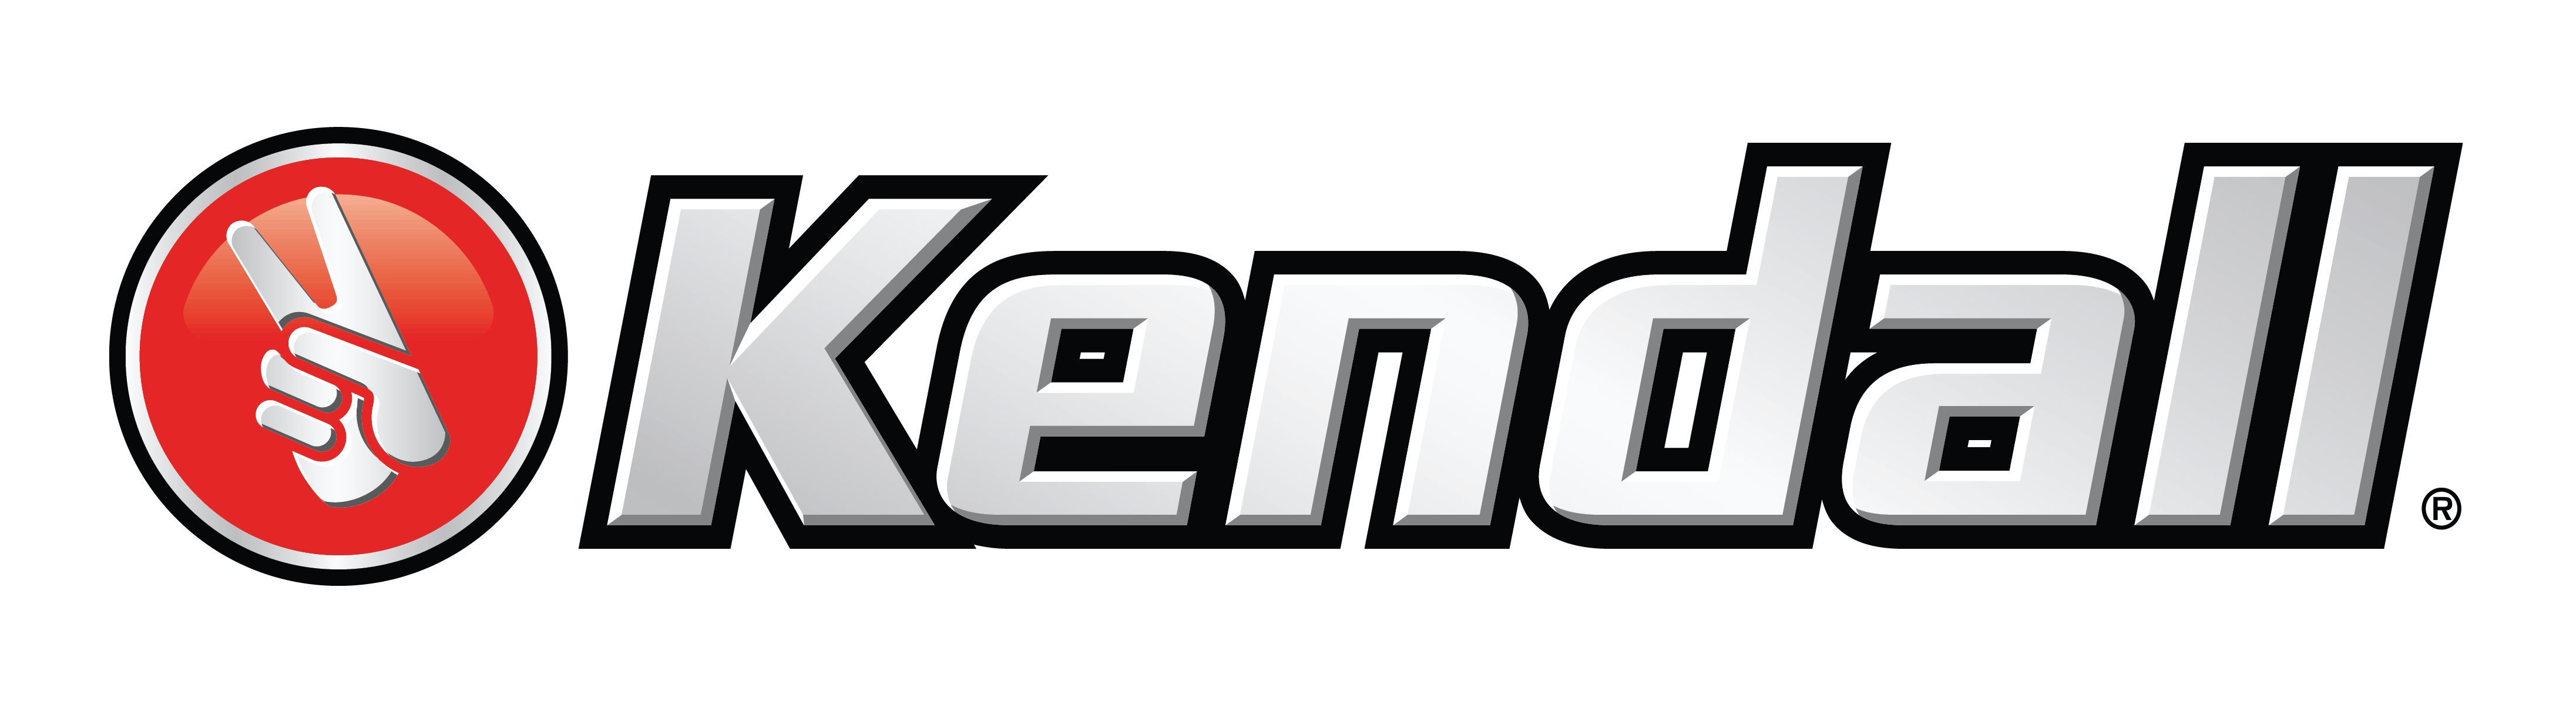 Kendall Logo - Kendall